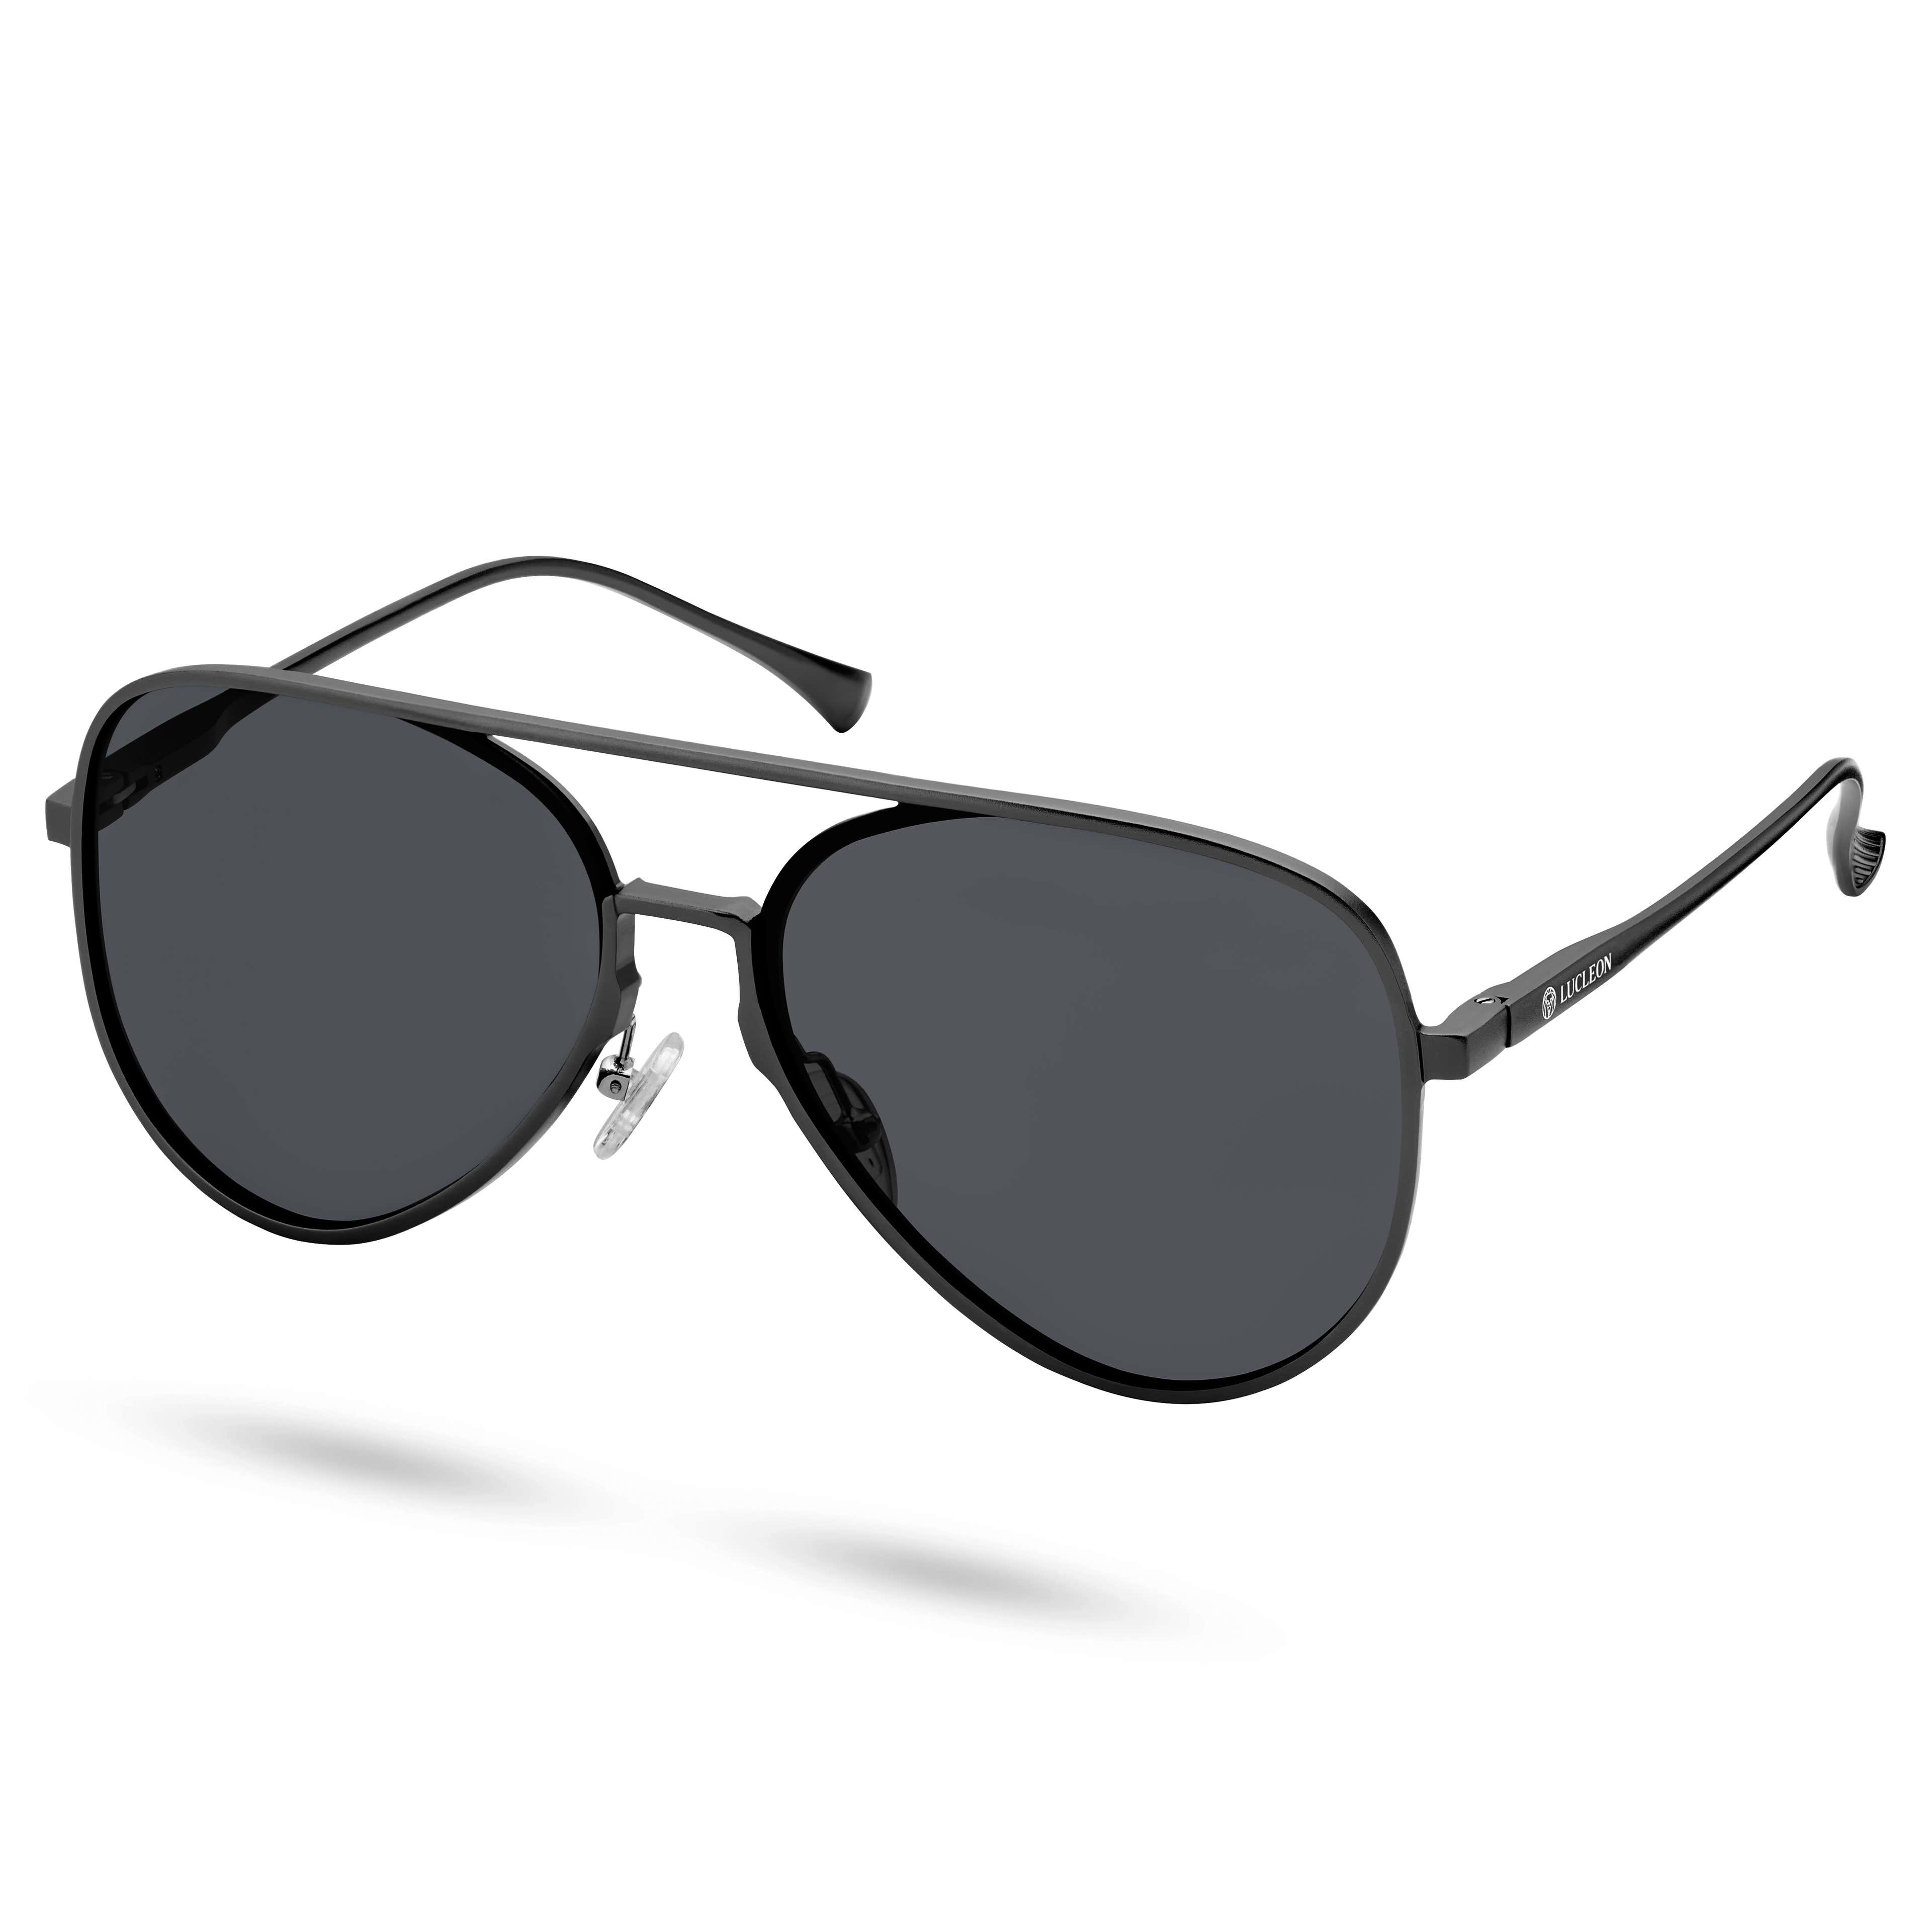 Black Smoke Polarized Aviator Sunglasses